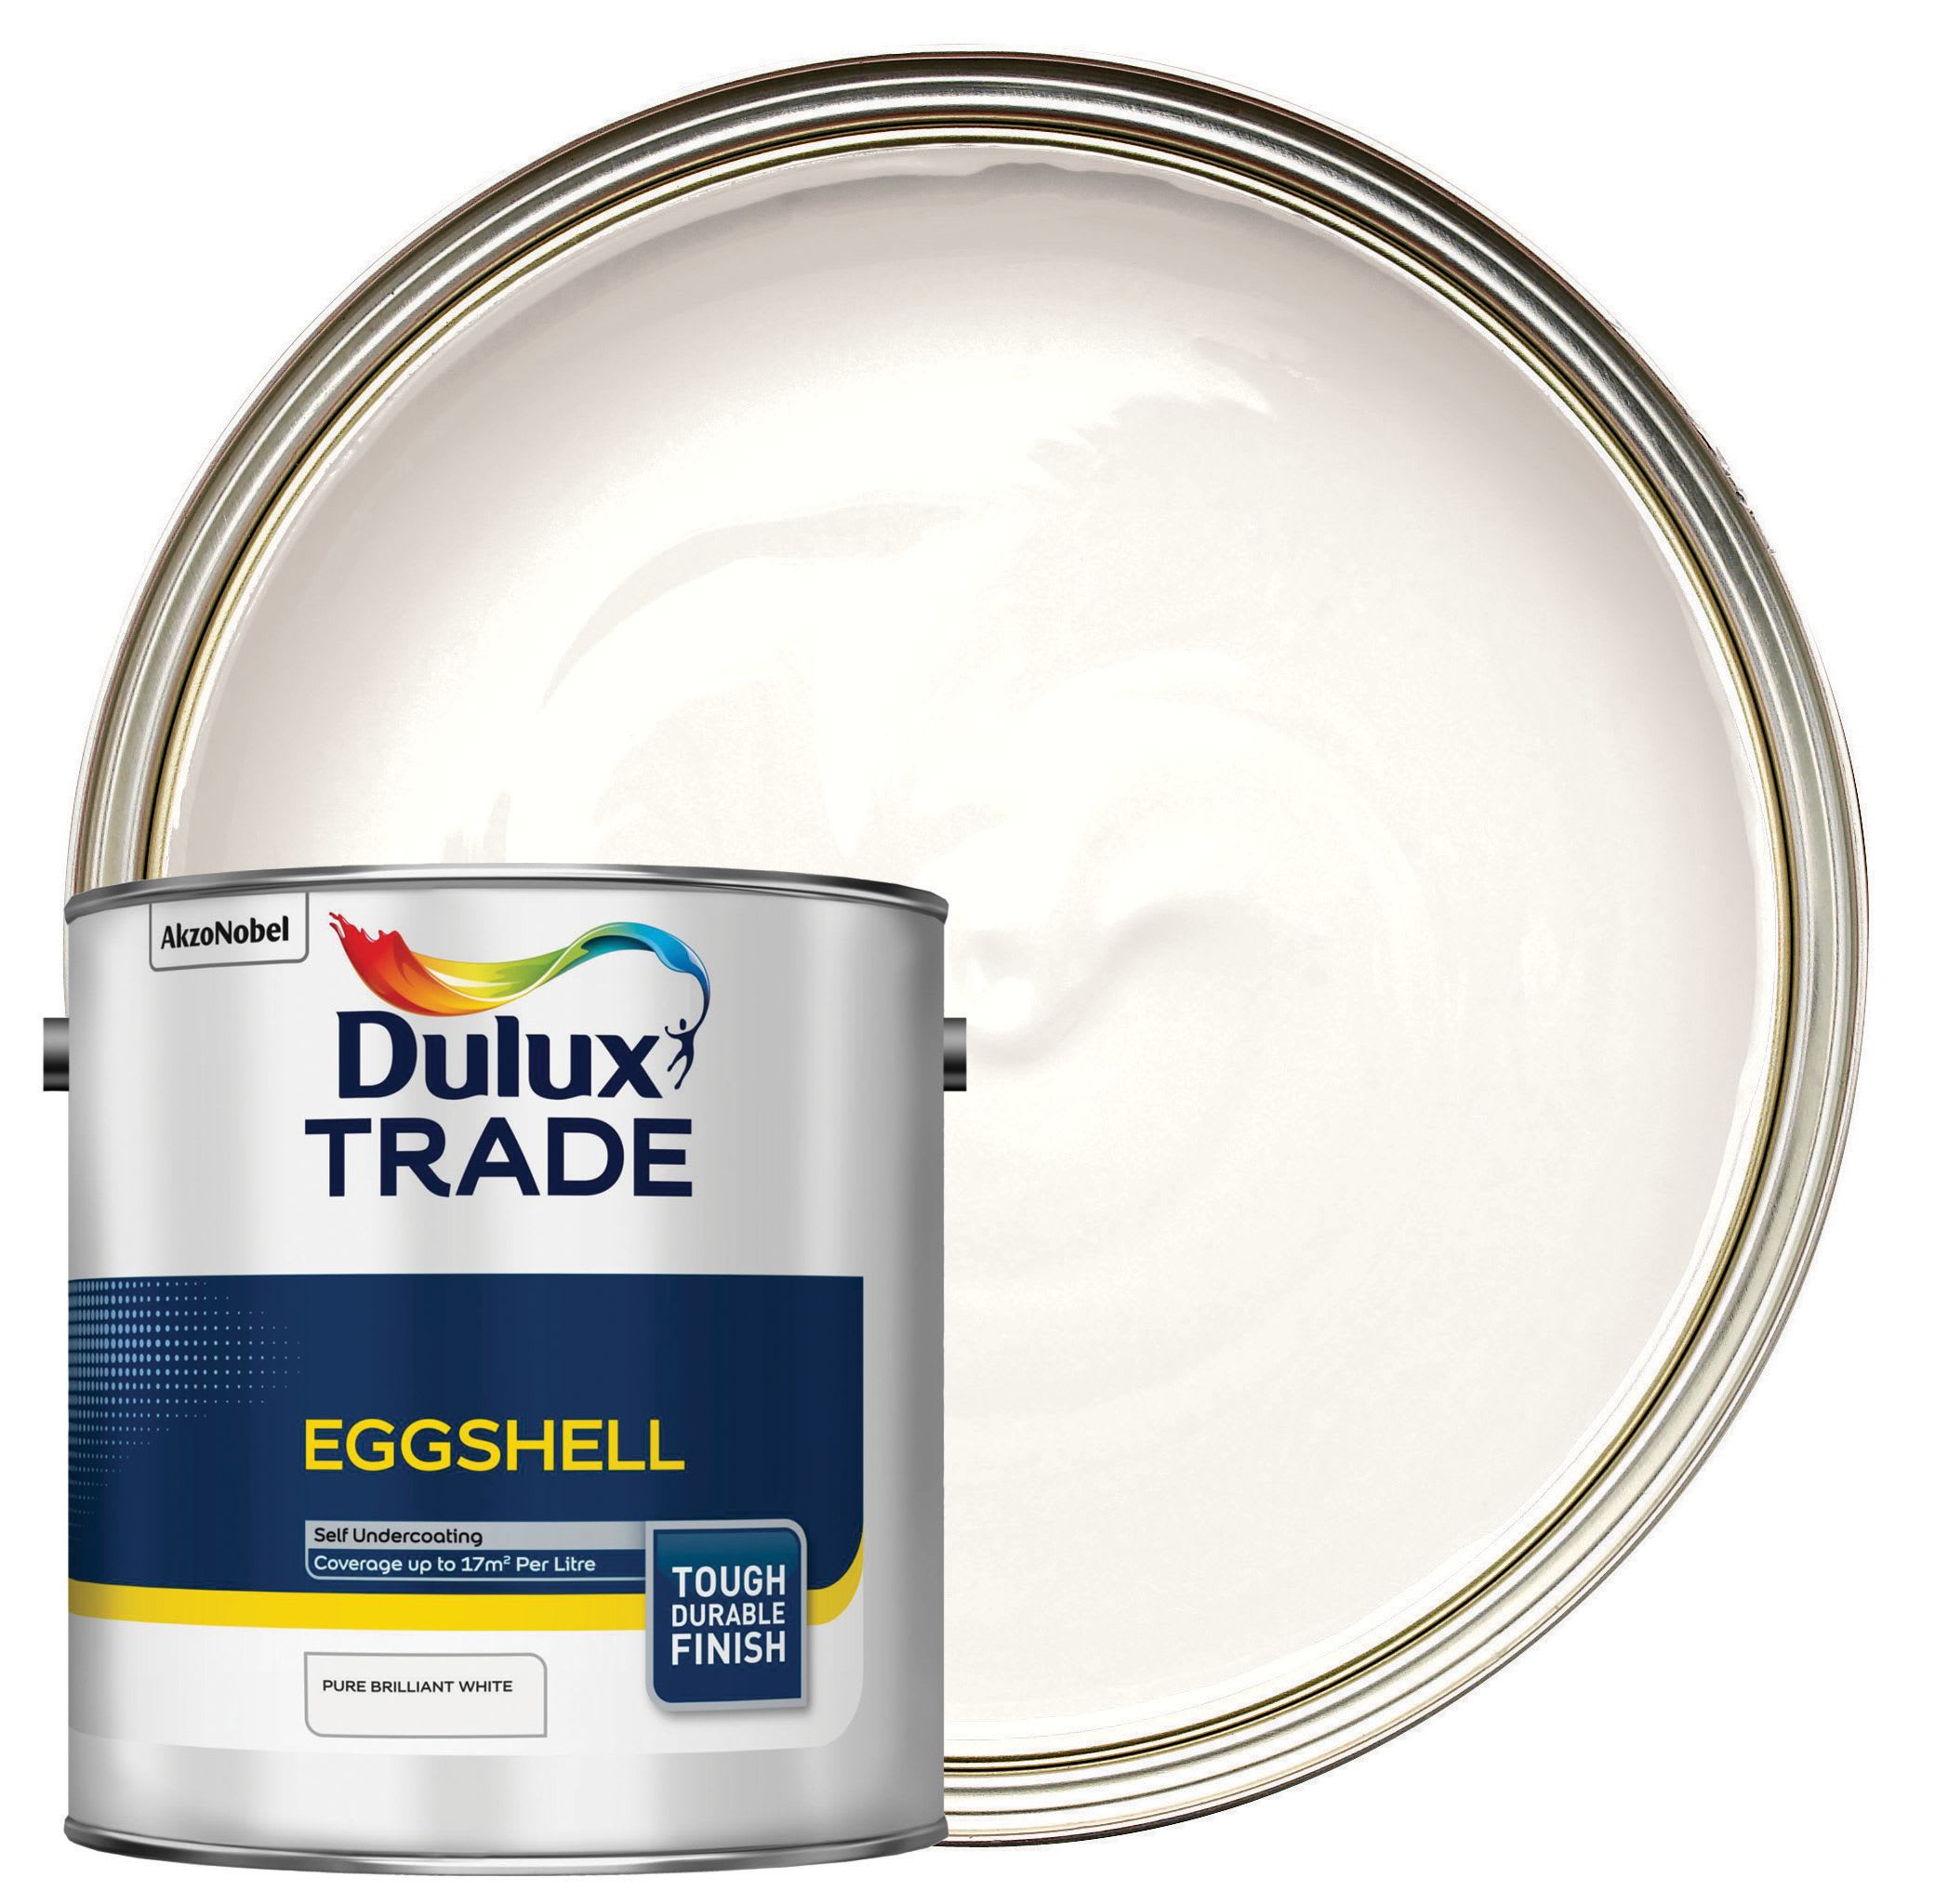 Dulux Trade Eggshell Paint - Pure Brilliant White